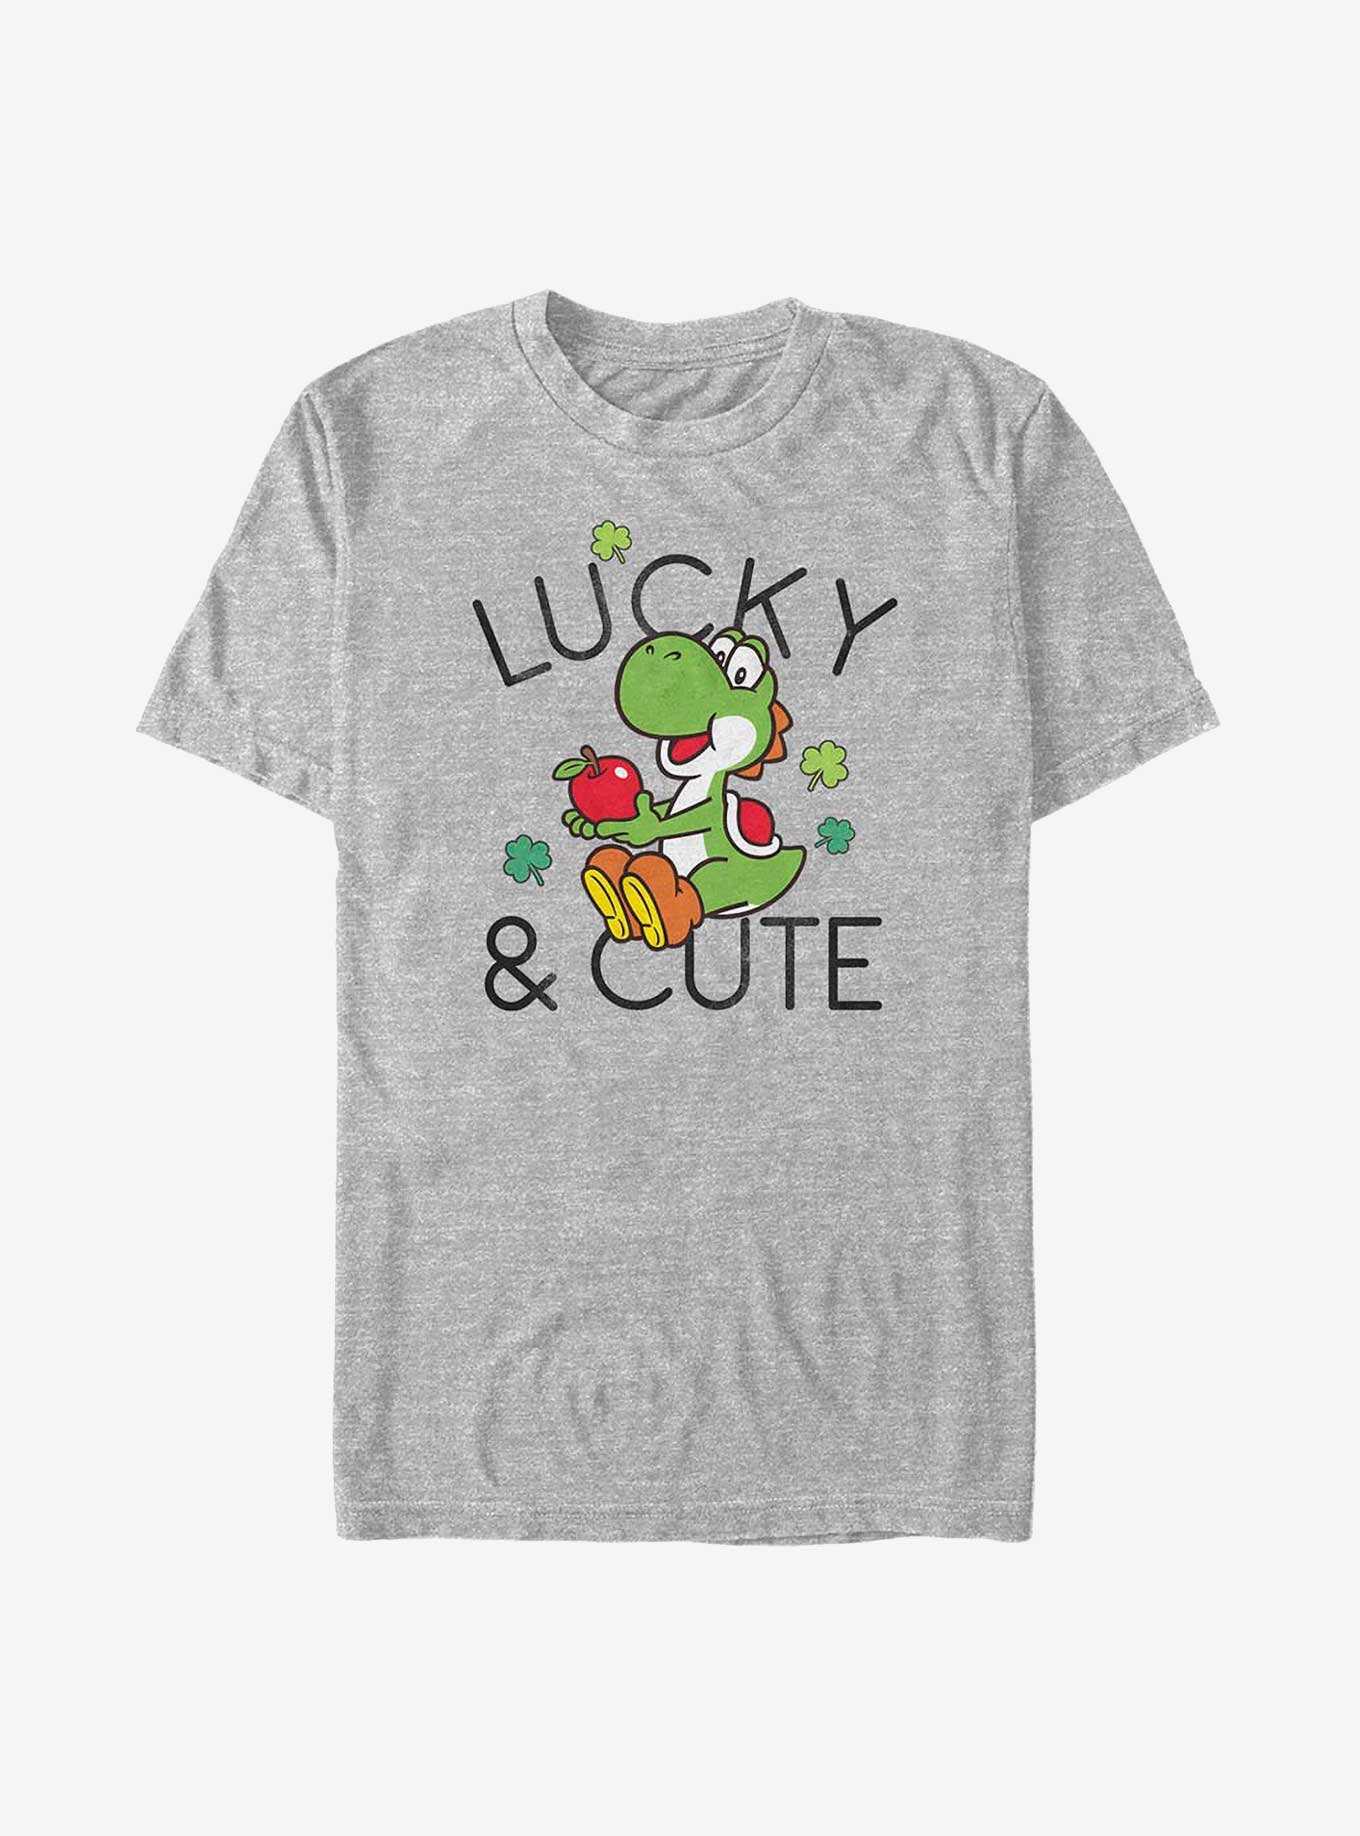 Nintendo Lucky And Cute Yoshi T-Shirt, , hi-res